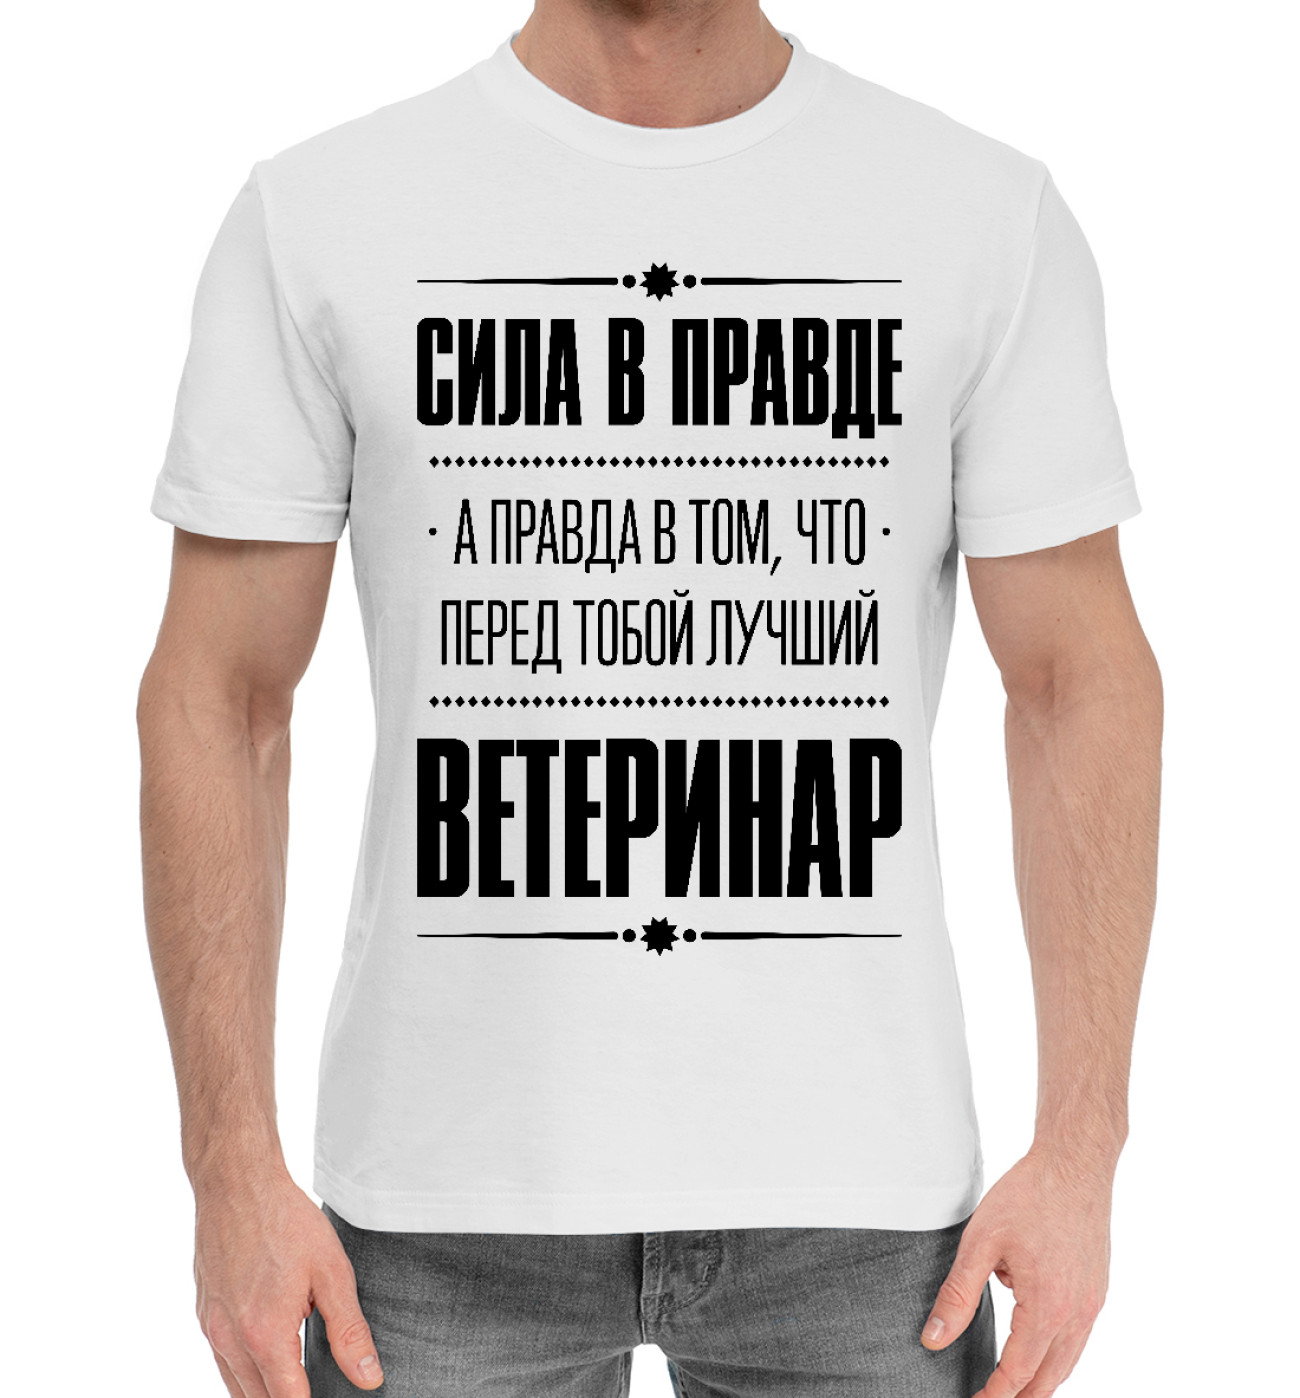 Мужская Хлопковая футболка Ветеринар (Правда), артикул: VRC-695006-hfu-2